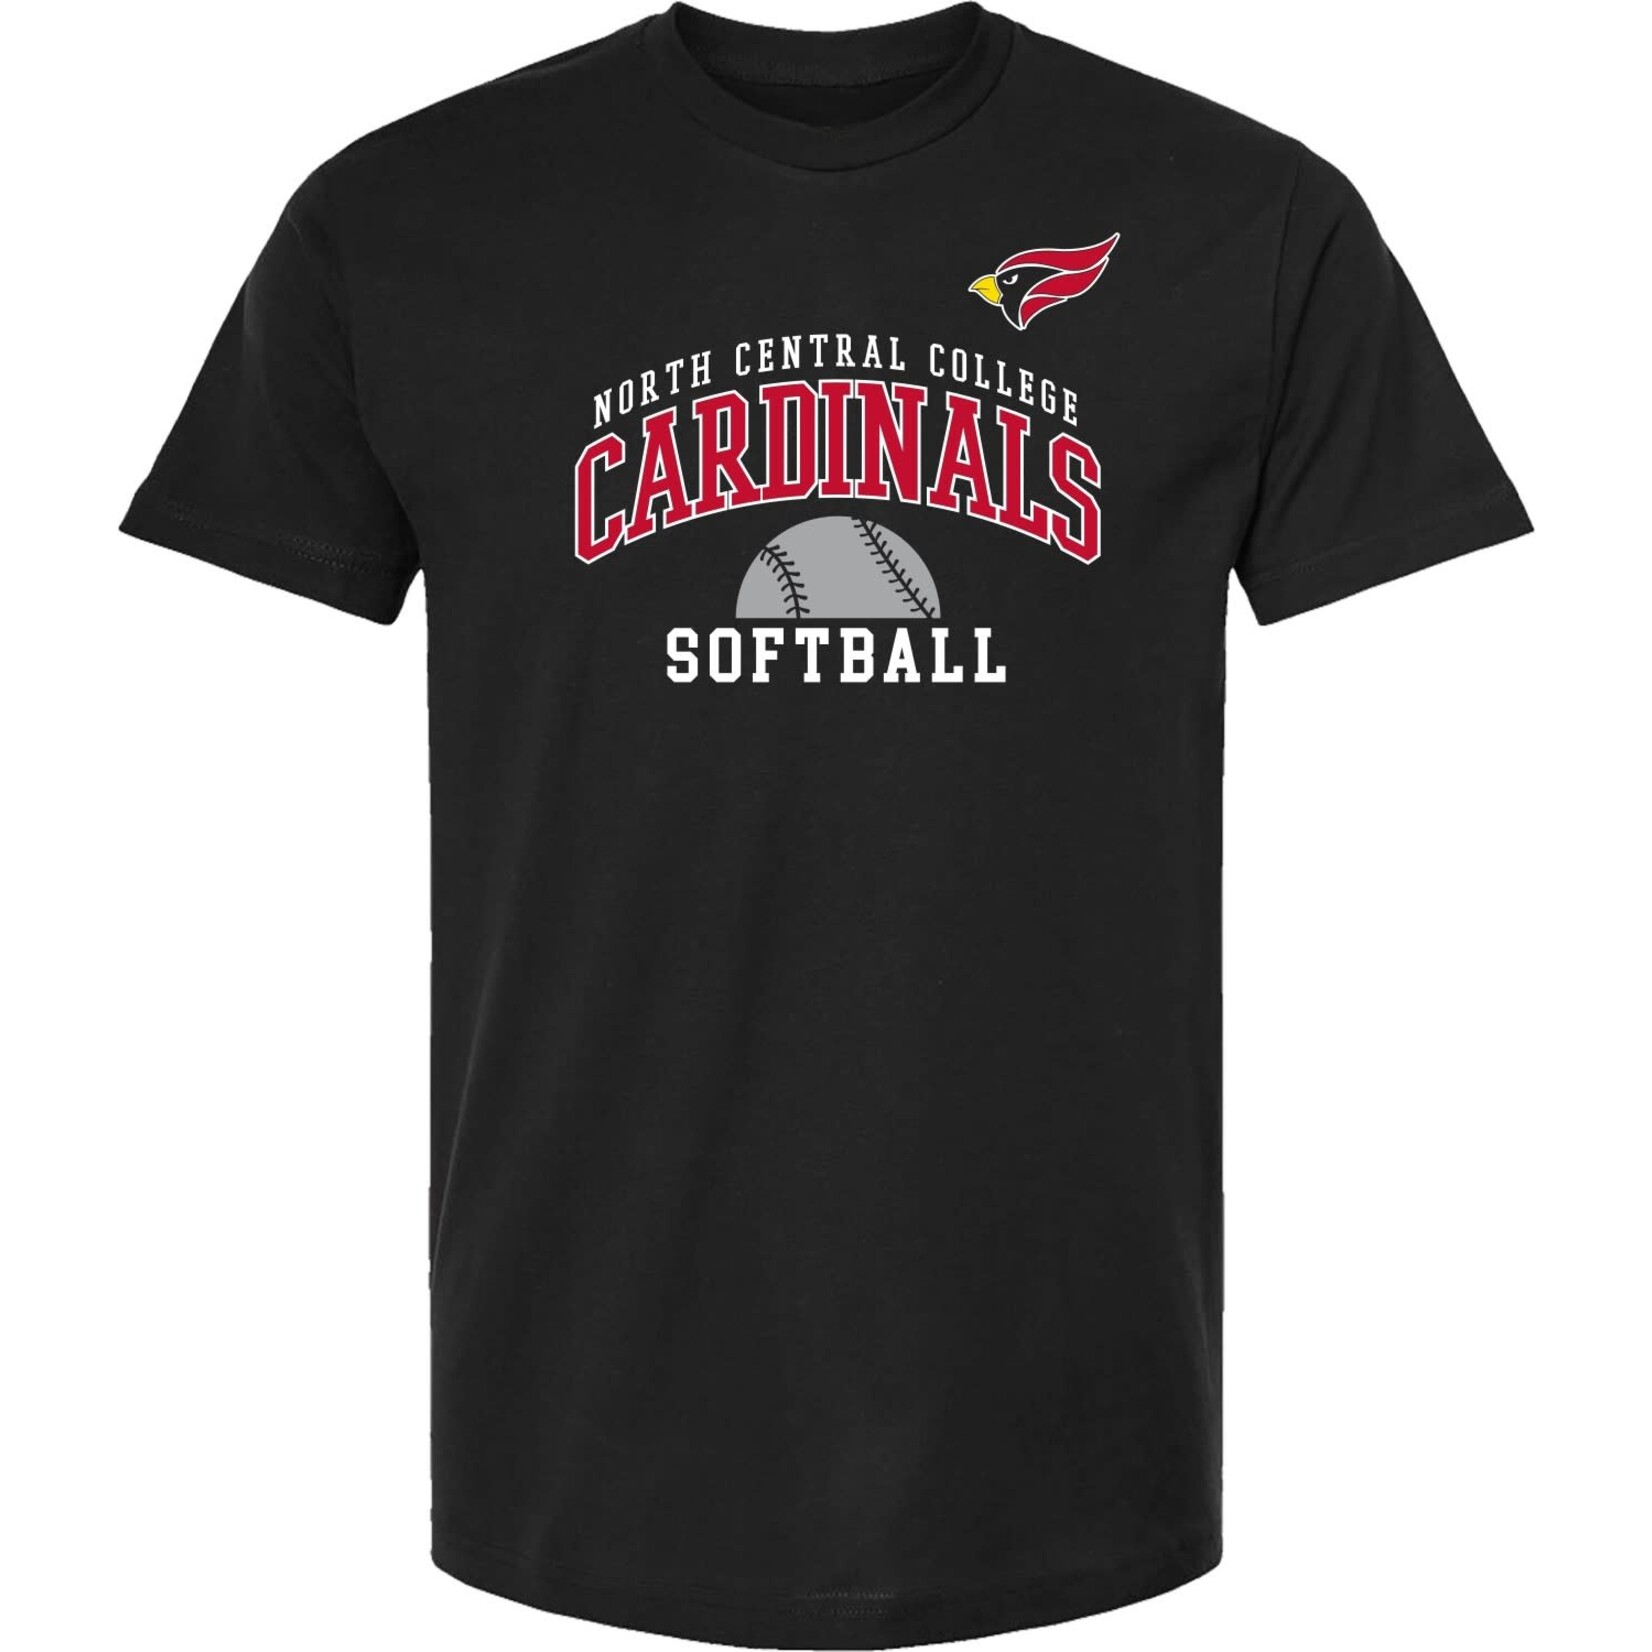 College House Name Drop Shirt in black  - Softball